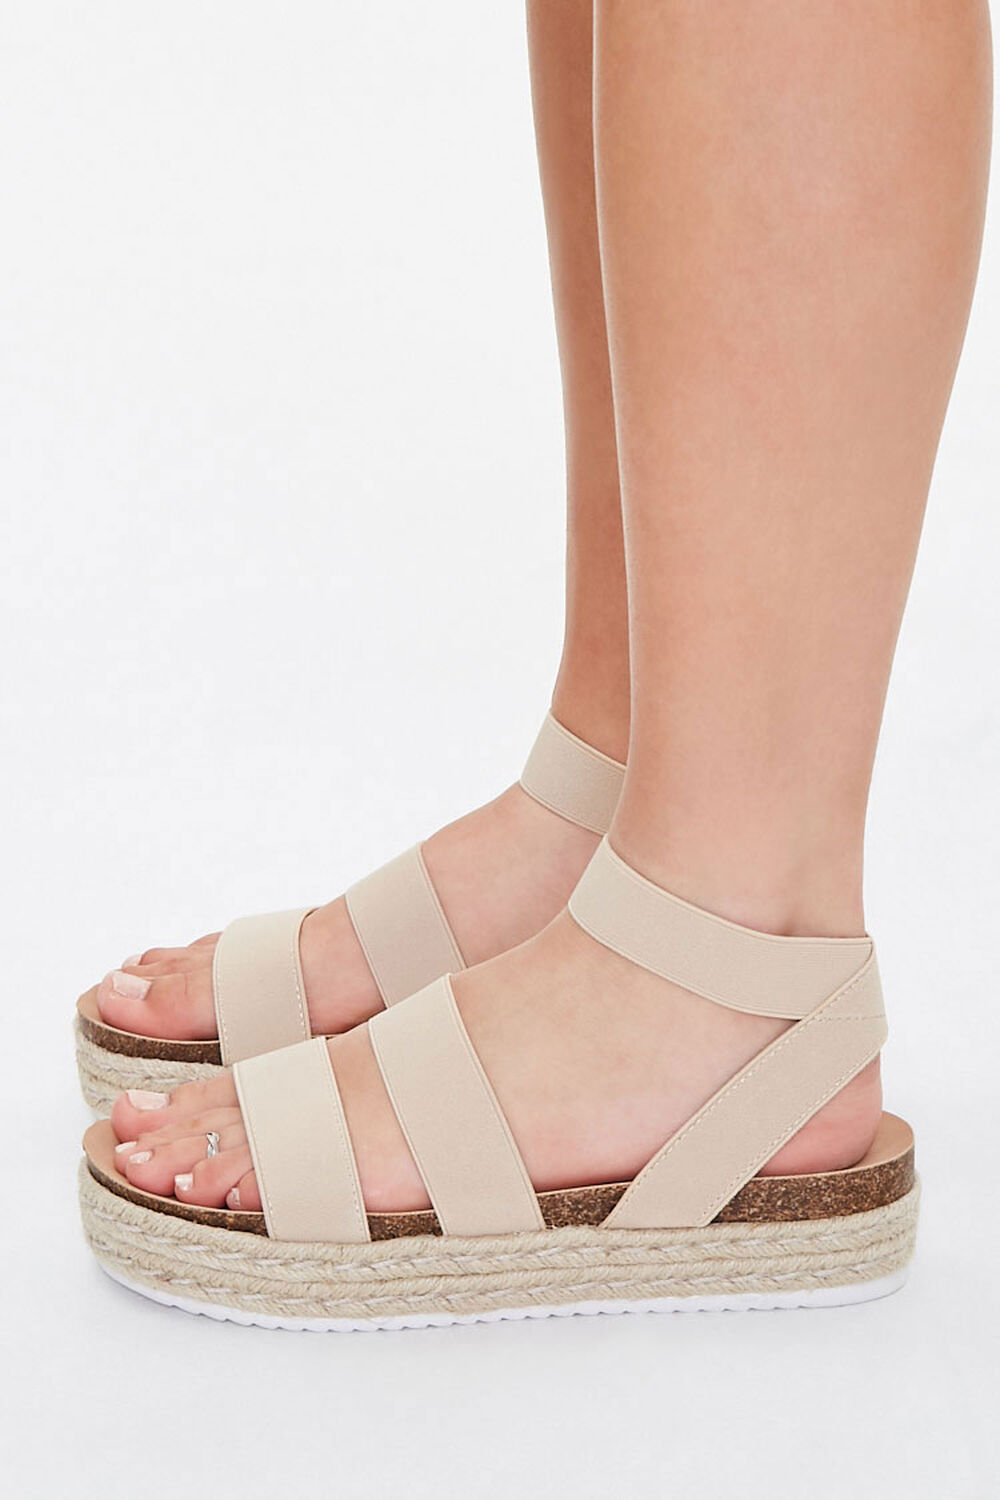 NUDE Espadrille Flatform Sandals, image 3